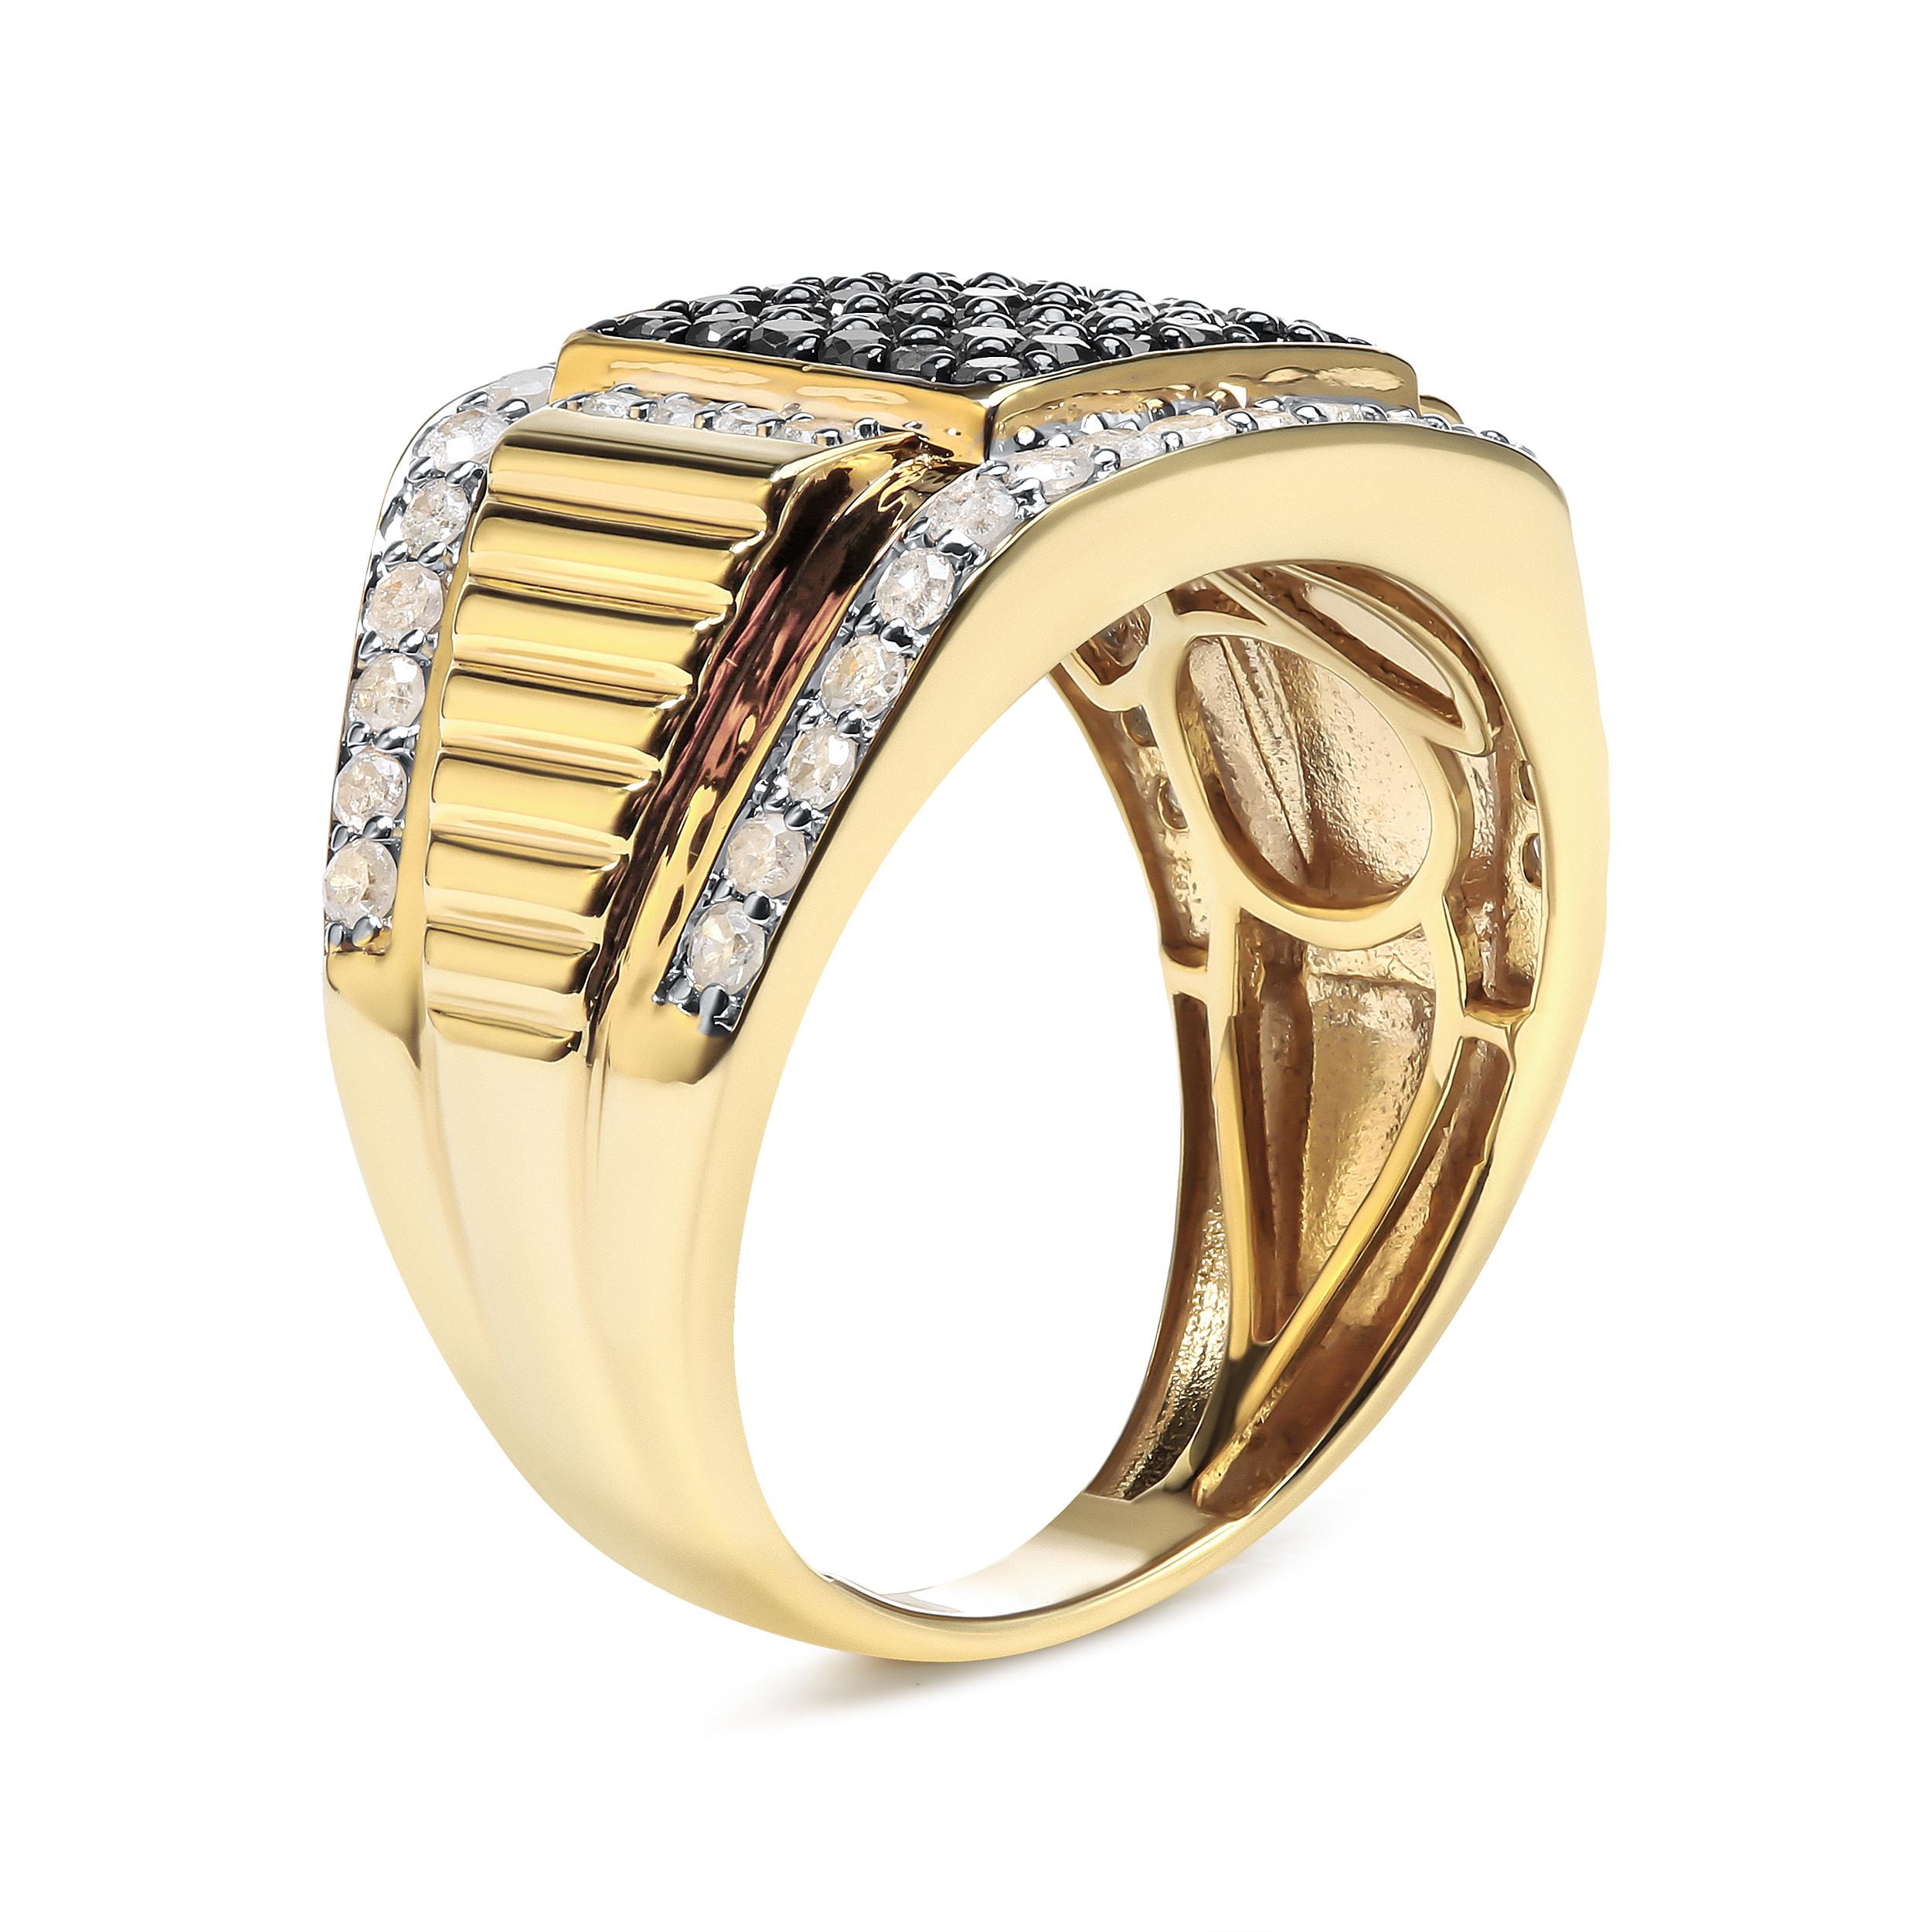 Modern Men's 14K Yellow Gold over Silver 1 1/2 Carat White & Black Diamond Cluster Ring For Sale